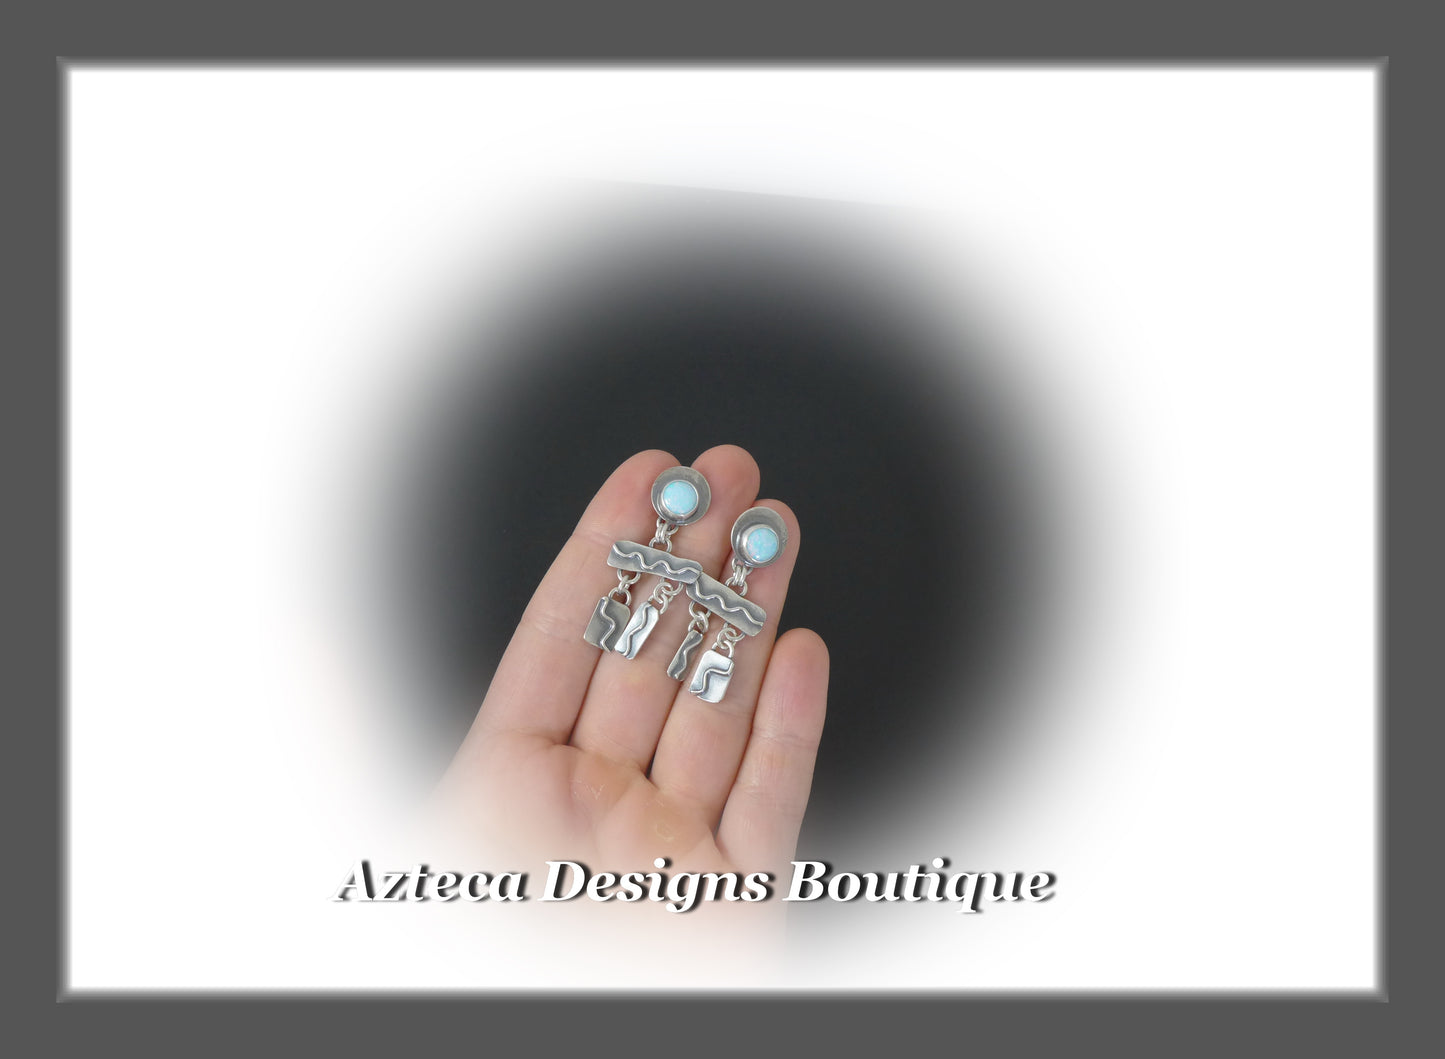 Desert Wind+Cultured Sterling Opal+Sterling Silver Hand Fabricated Post Earrings